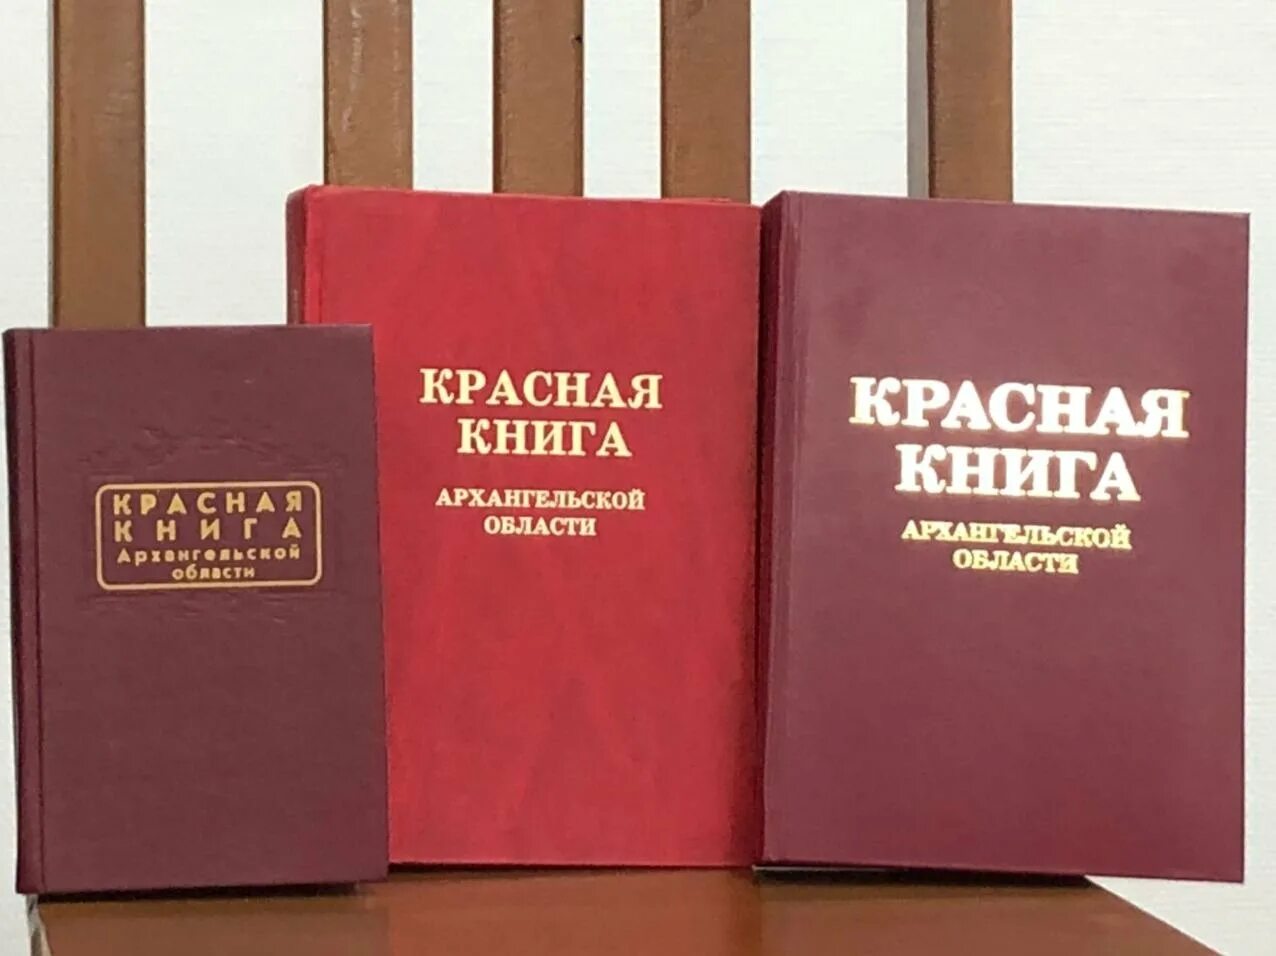 Красная книга. Krassnaya kniqa. Красная книга обложка. Виды красных книг.